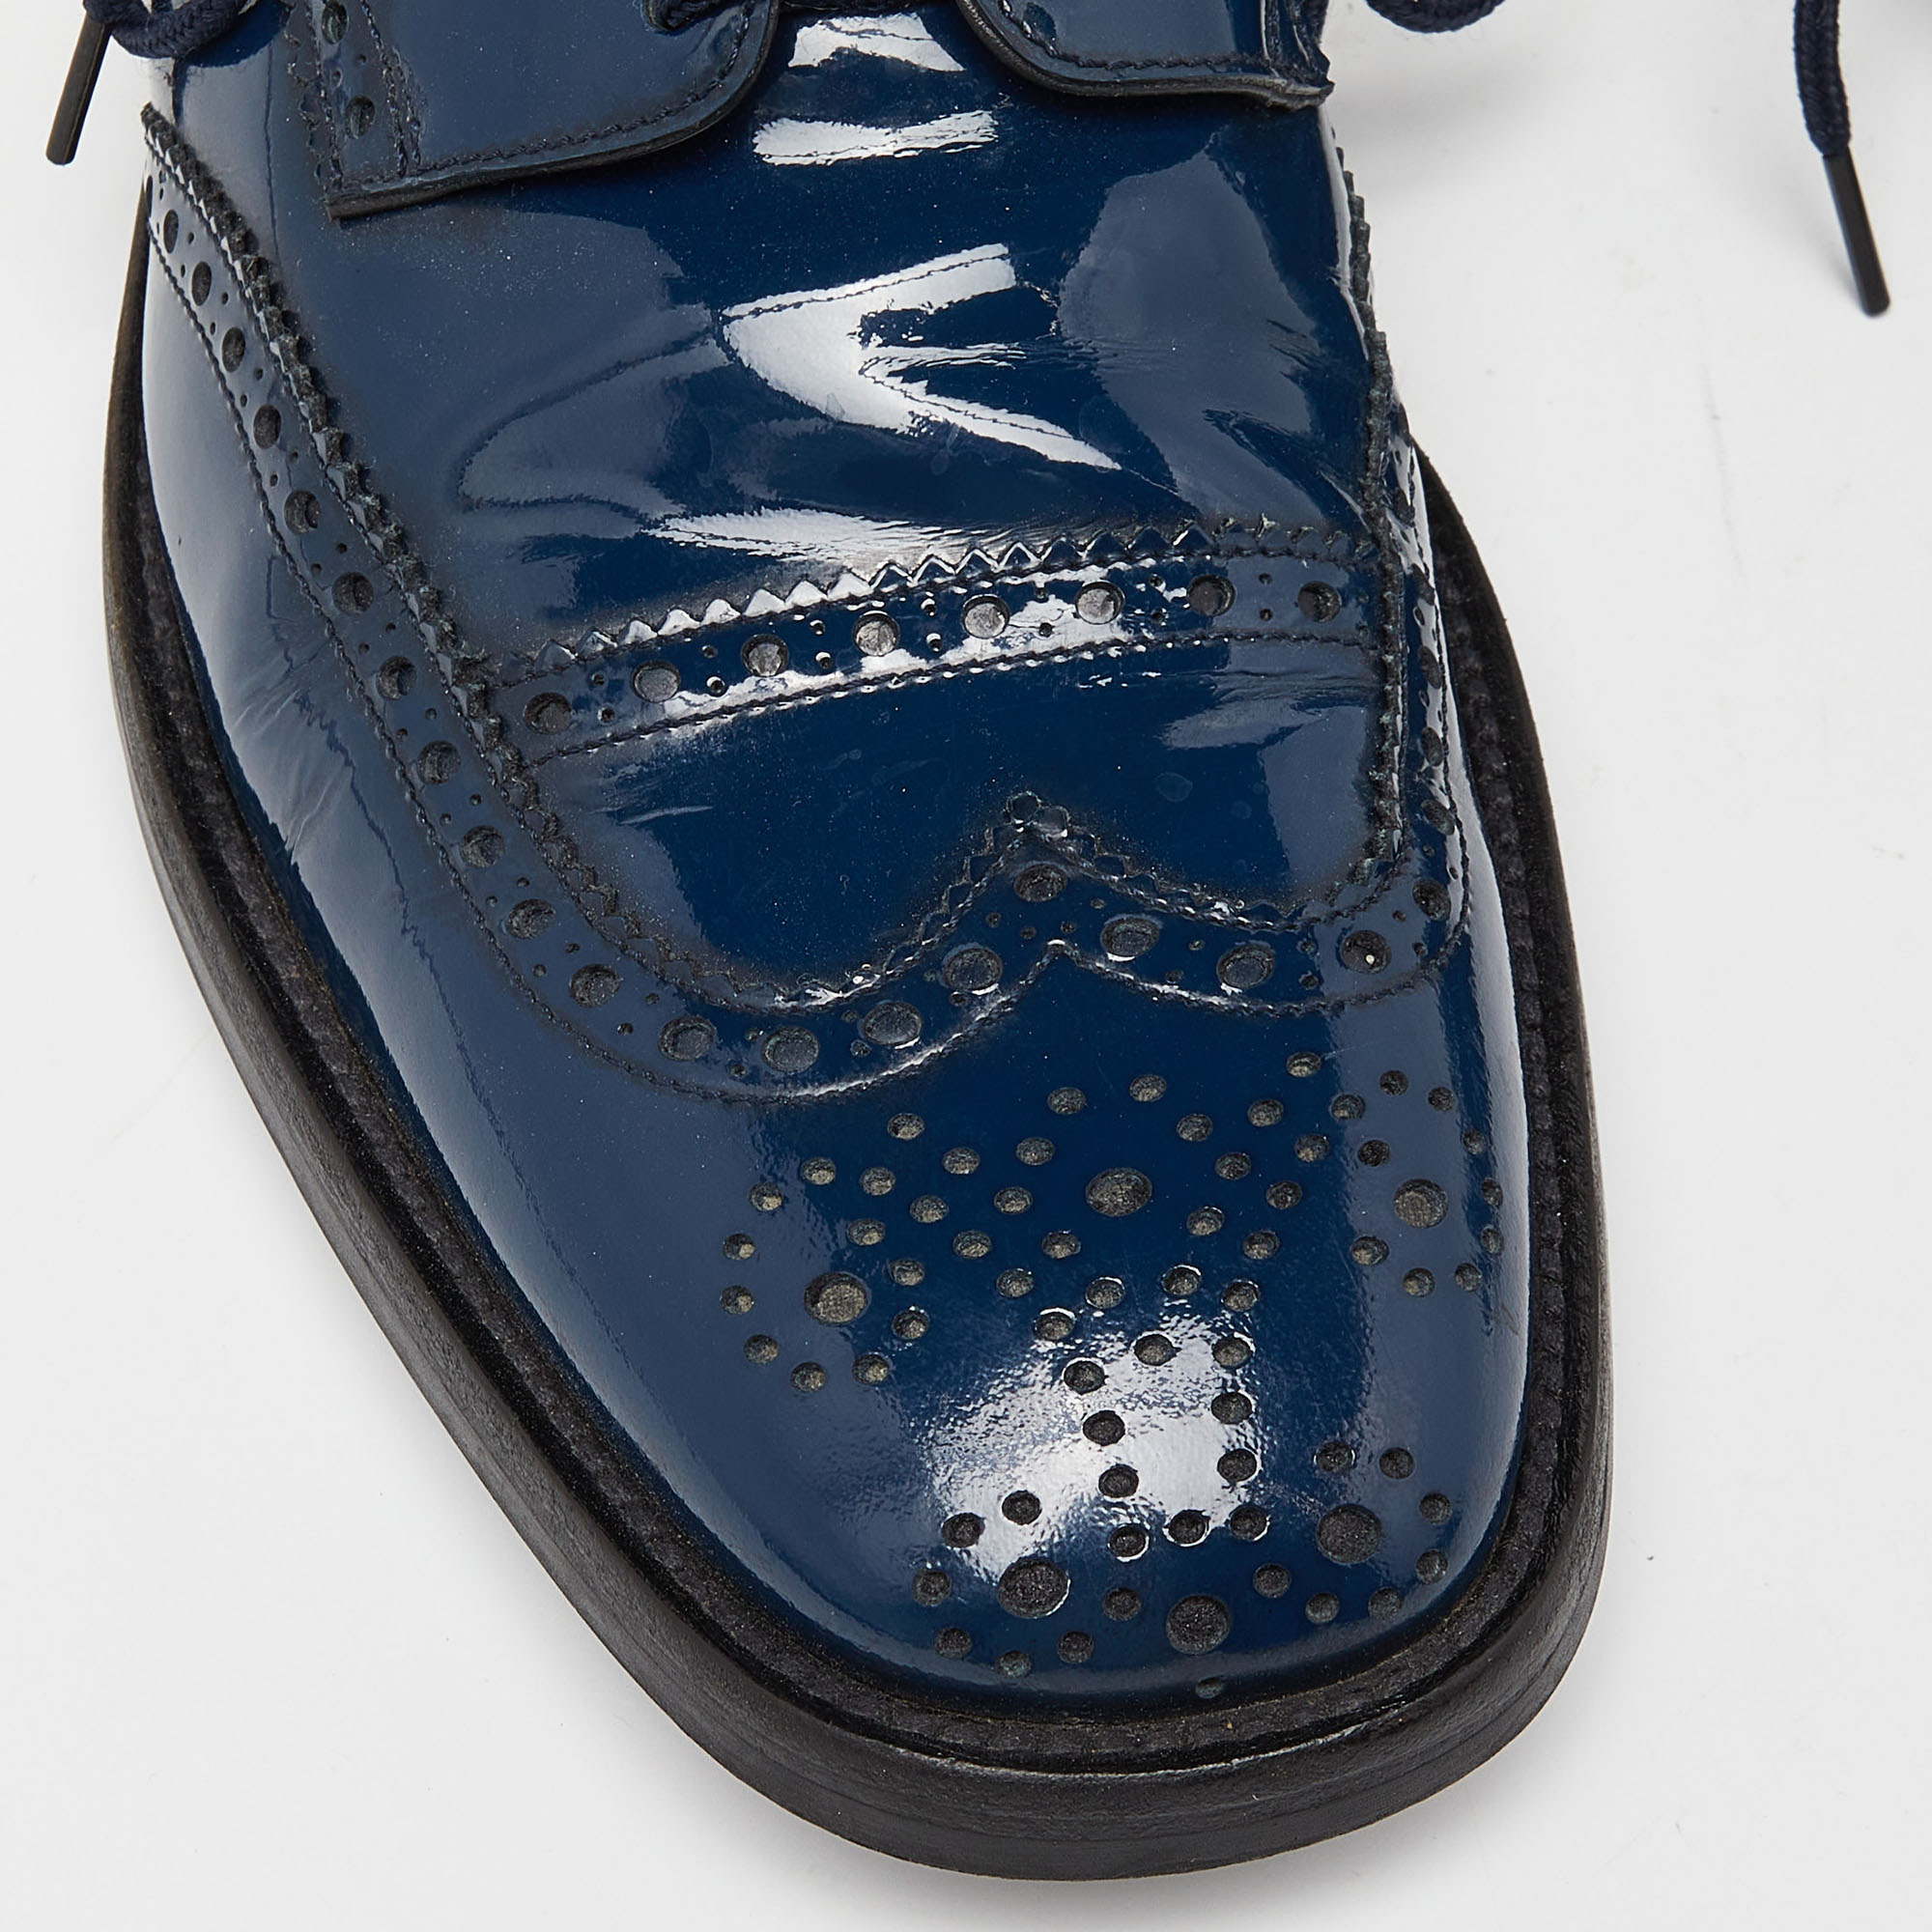 Dolce & Gabbana Blue Leather Brogue Derby Oxford Size 44